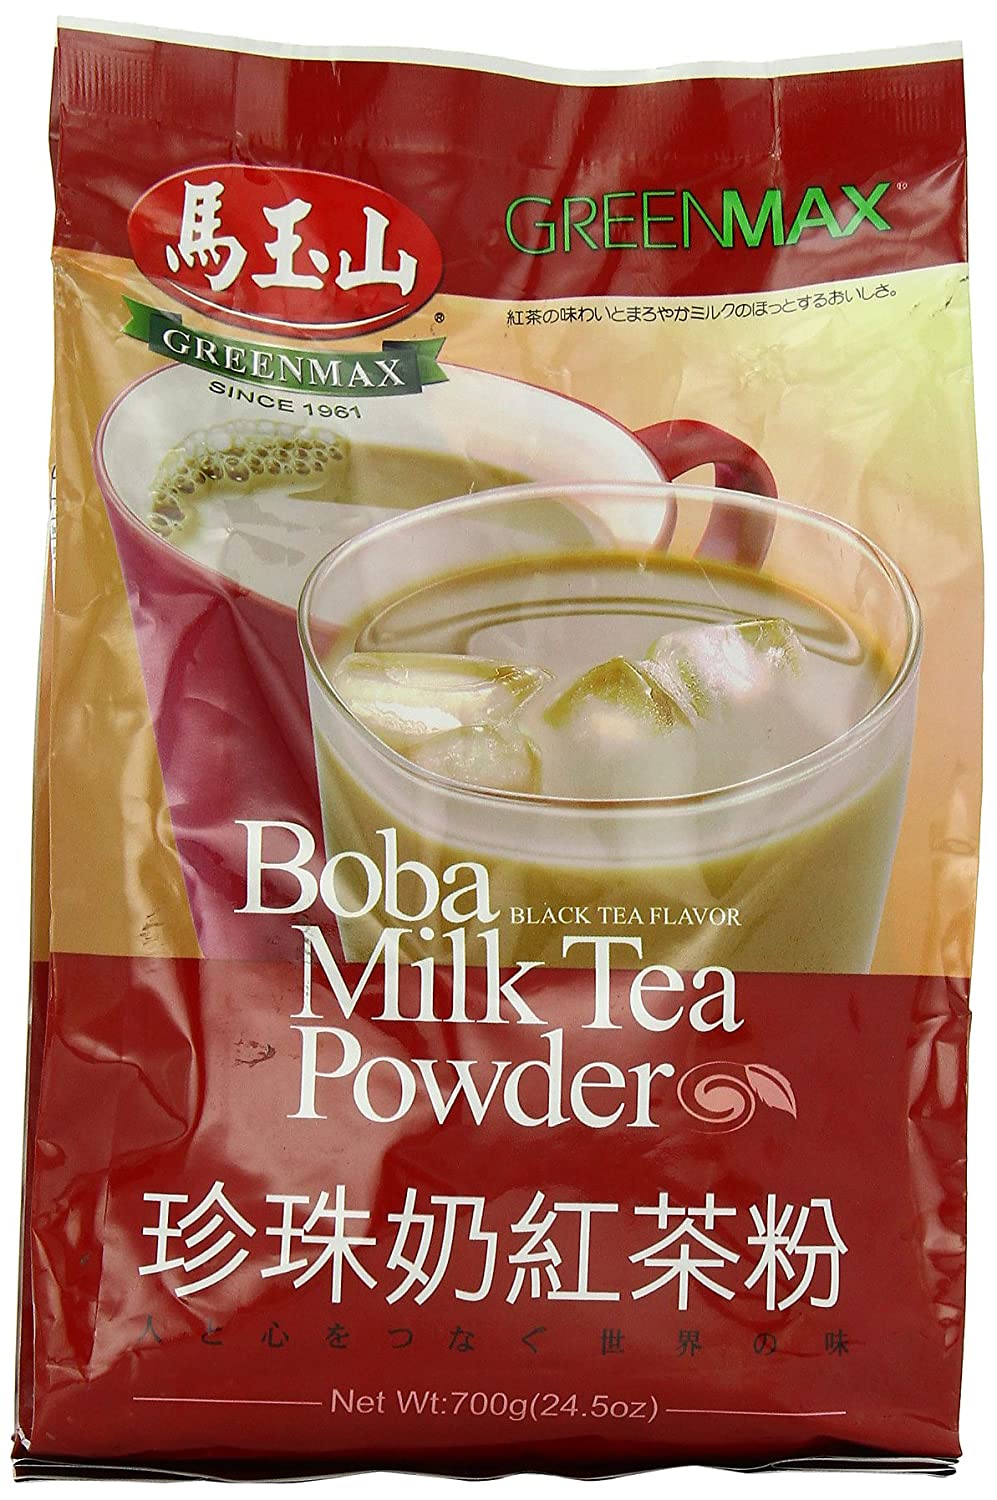 Greenmax Boba Milk Tea Powder- Black Tea